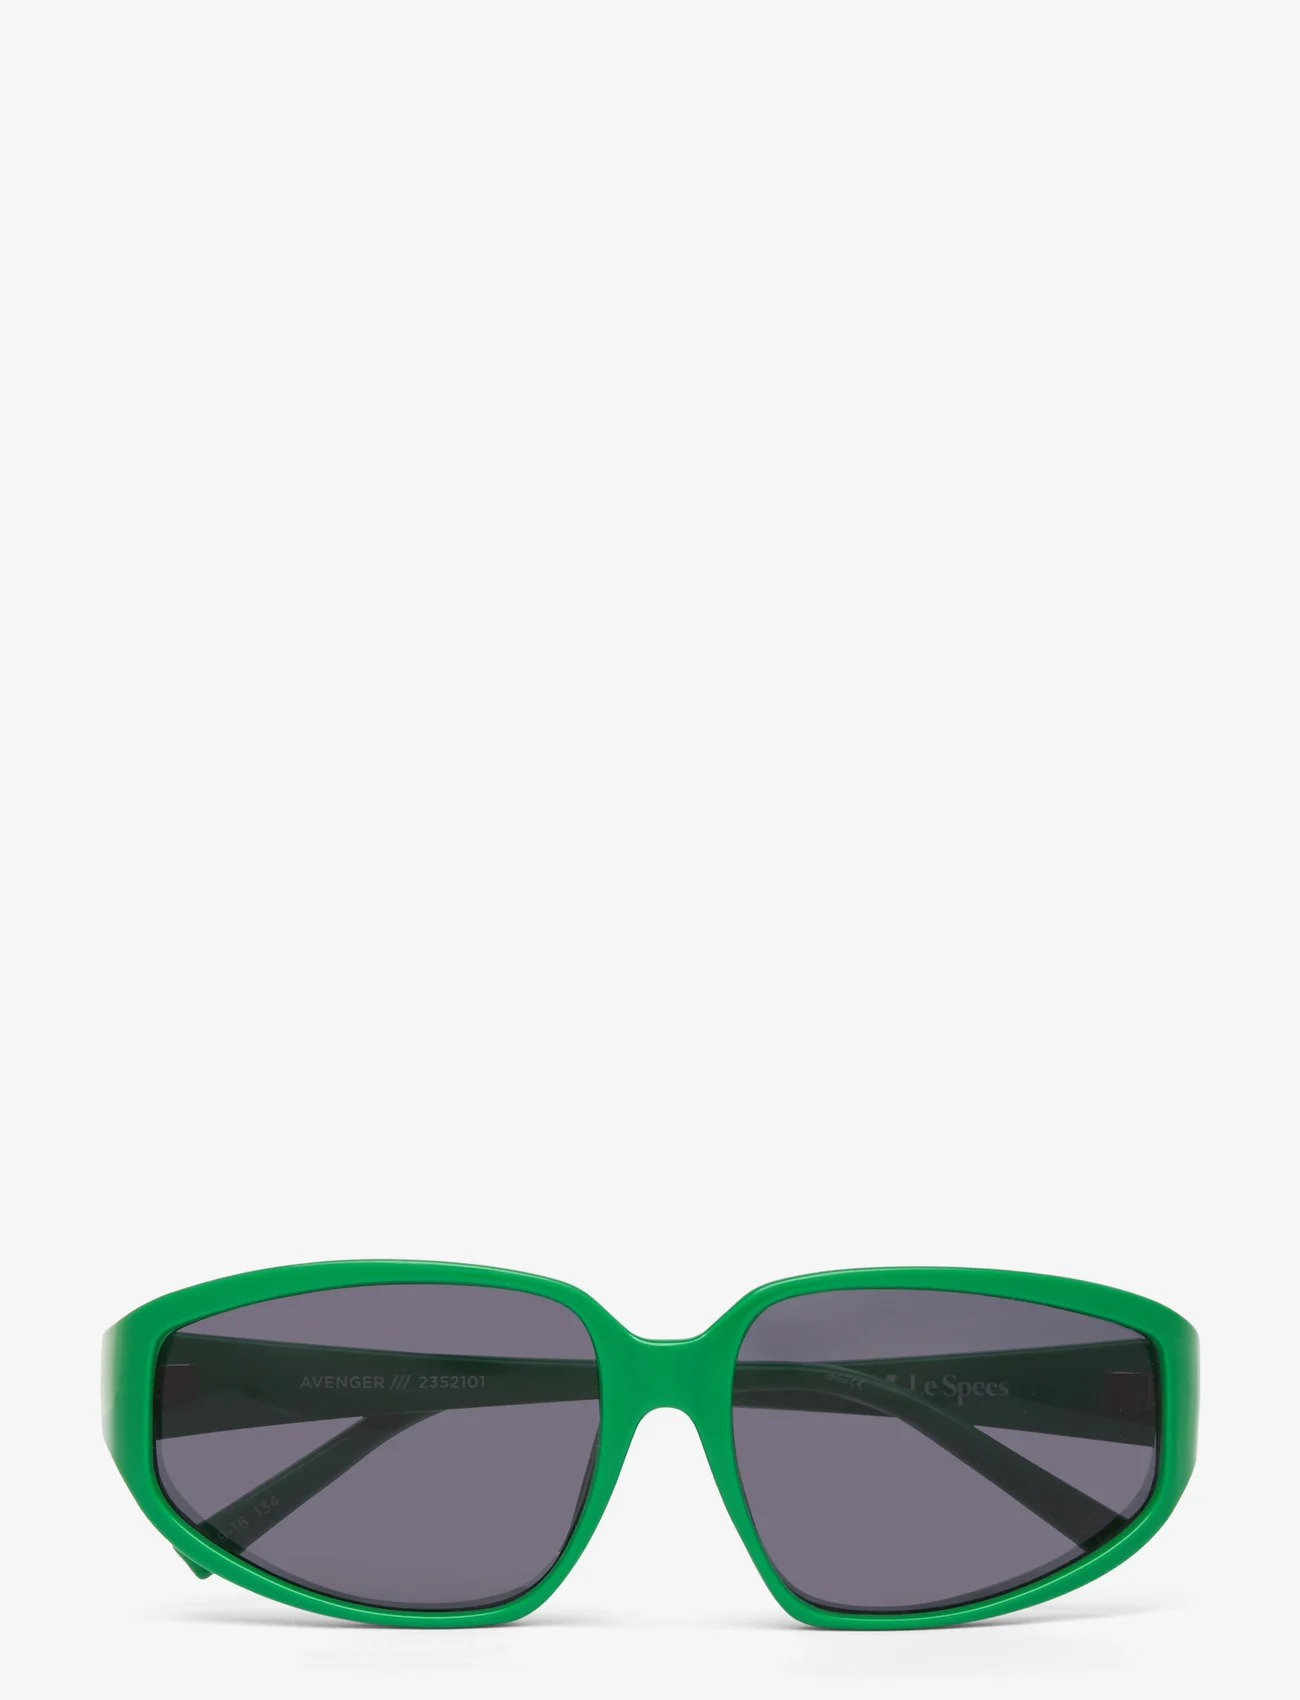 Le Specs - AVENGER - okulary przeciwsłoneczne motyl - parakeet green w/ smoke mono lens - 0